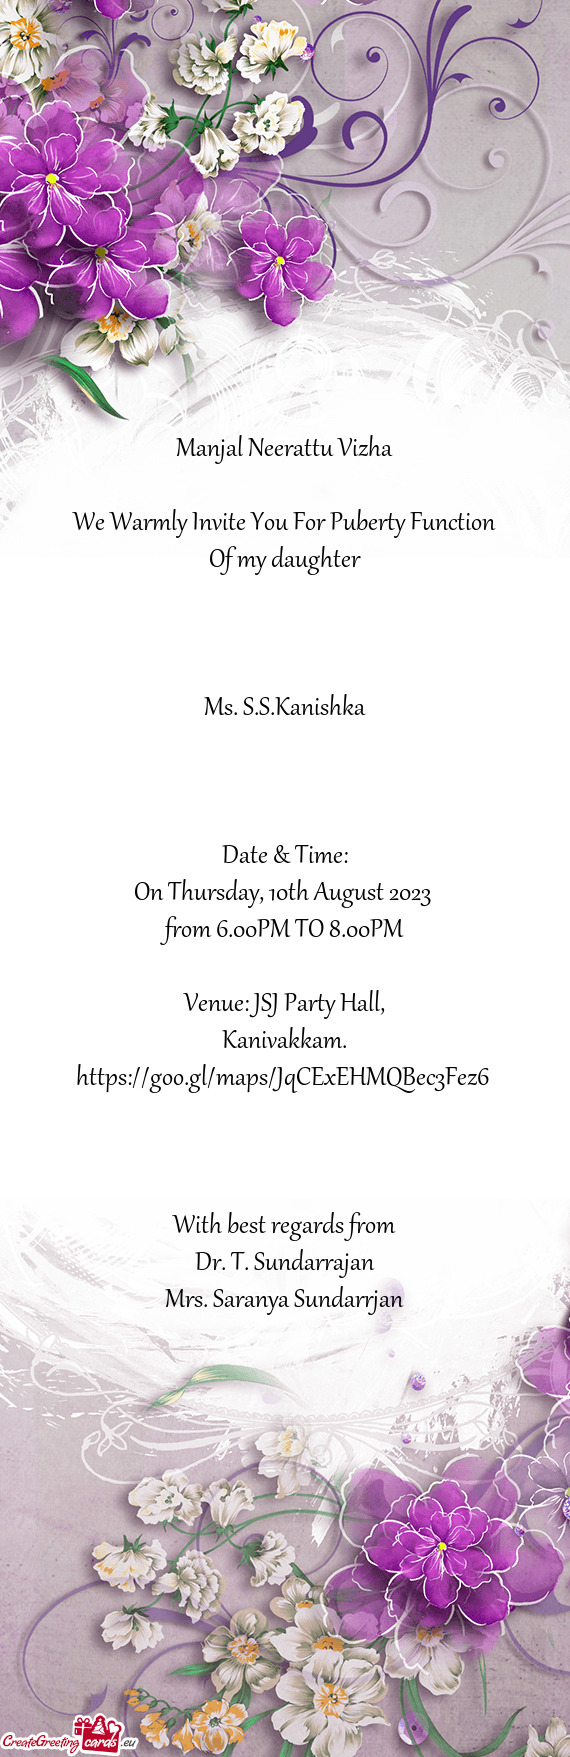 Ms. S.S.Kanishka